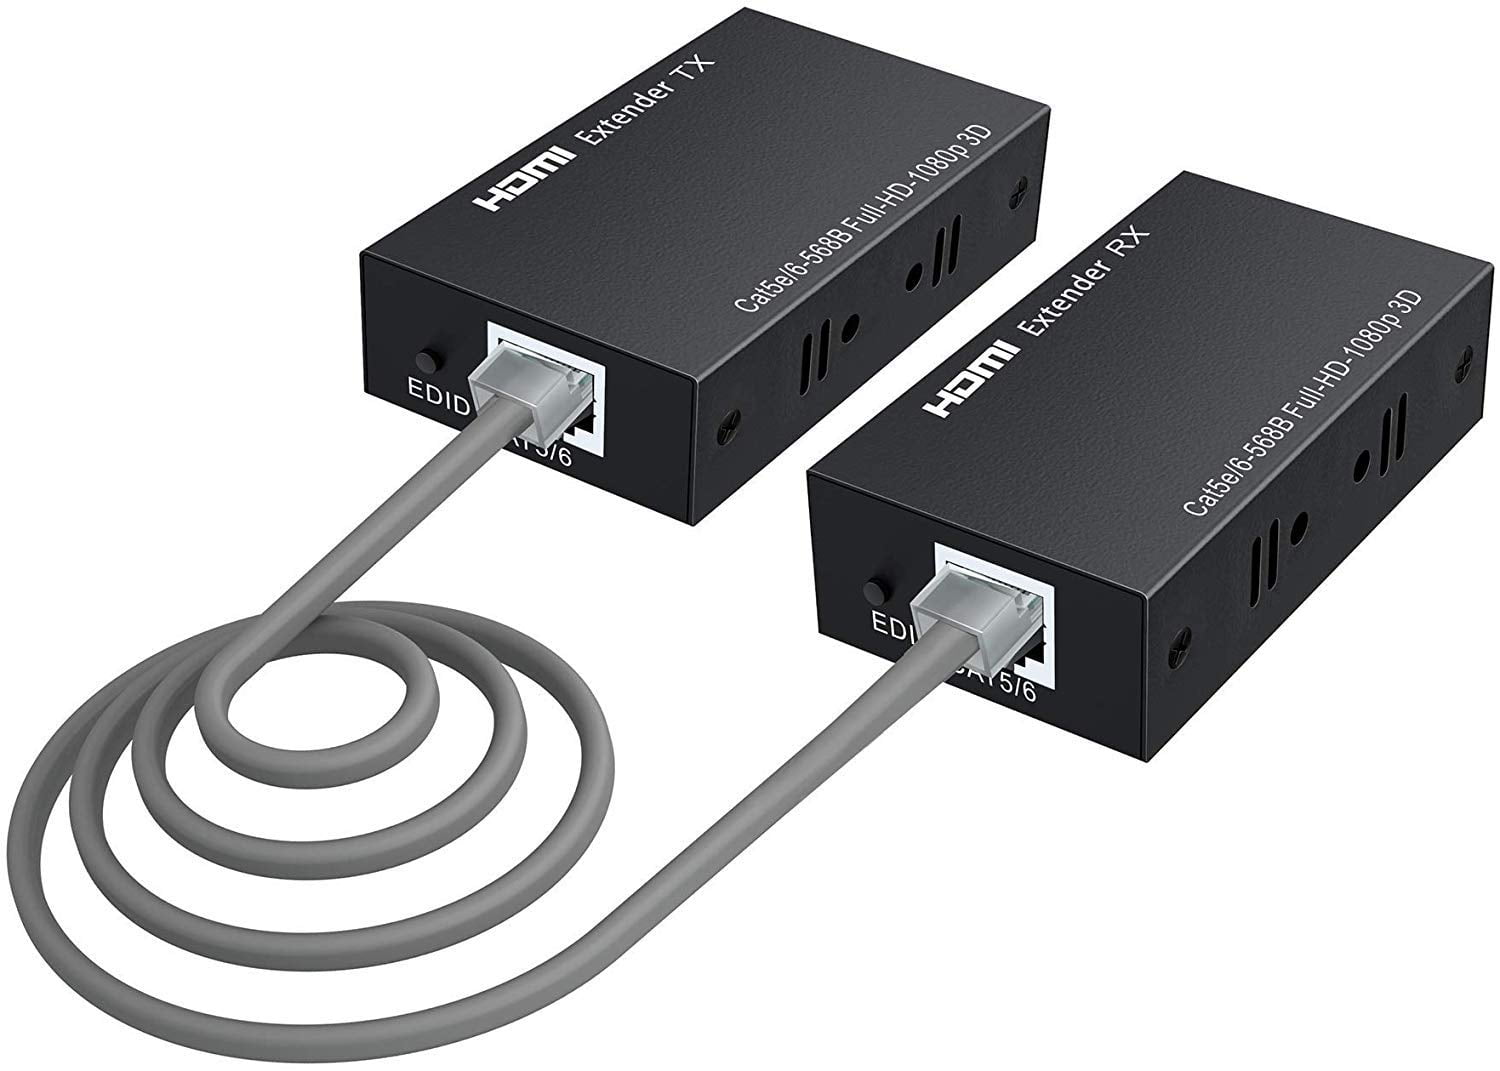 CONVERTISSEUR HDMI VERS RJ45 - PERMET DE TRANSPORTER LE SIGNAL HDMI SUR 50  METRES MAXI VIA 1 CABLE UTP5E